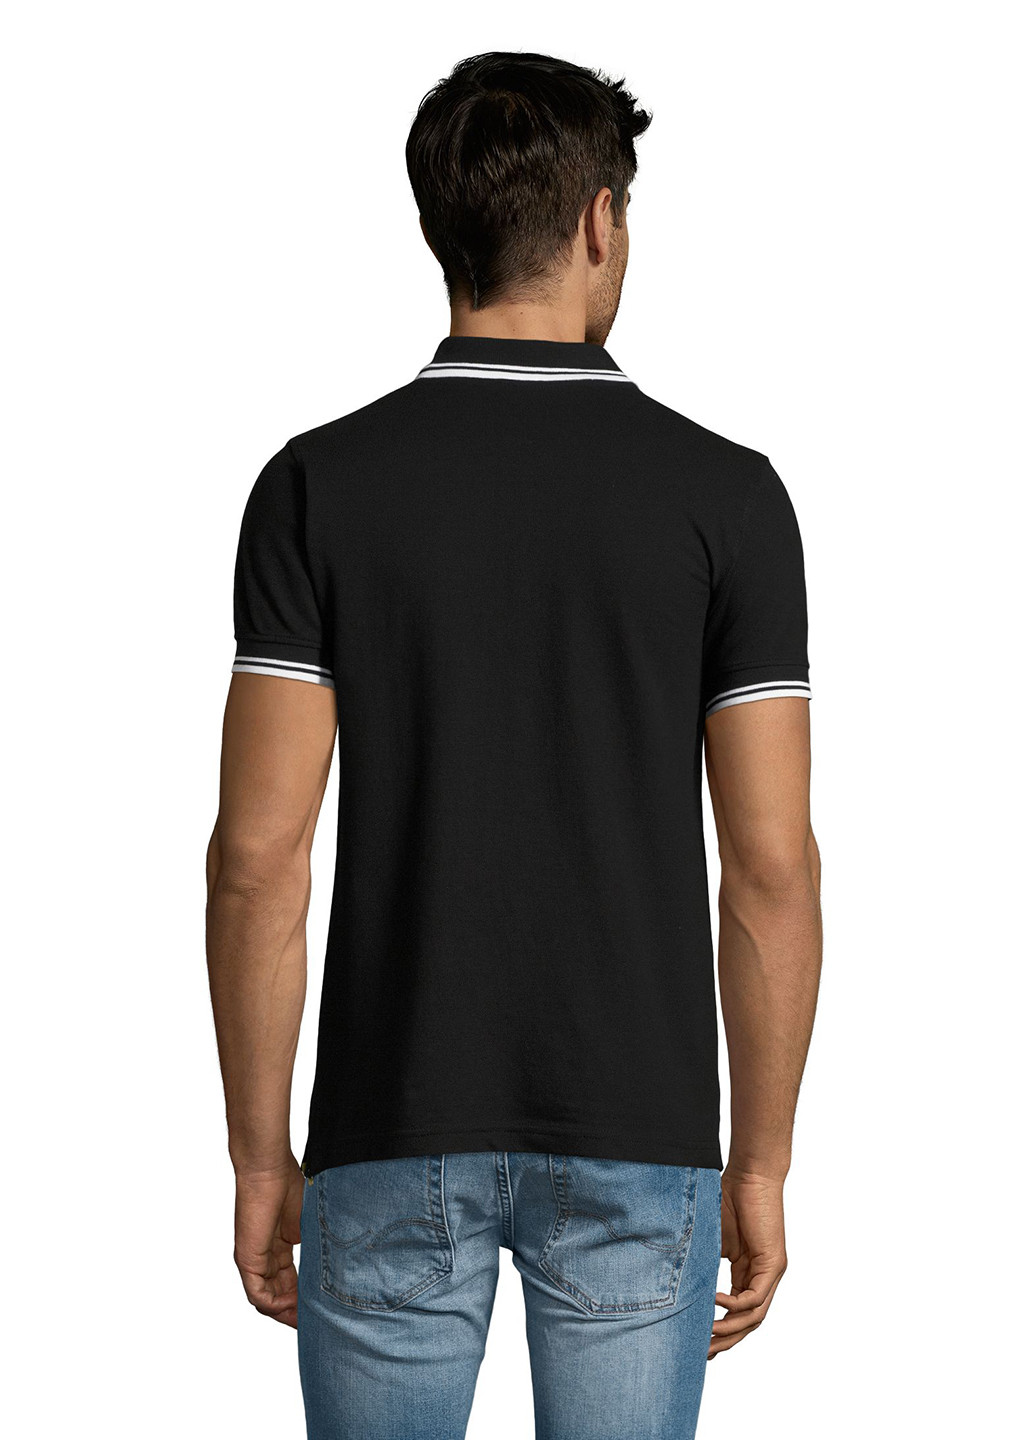 Черная футболка-поло для мужчин Sol's однотонная